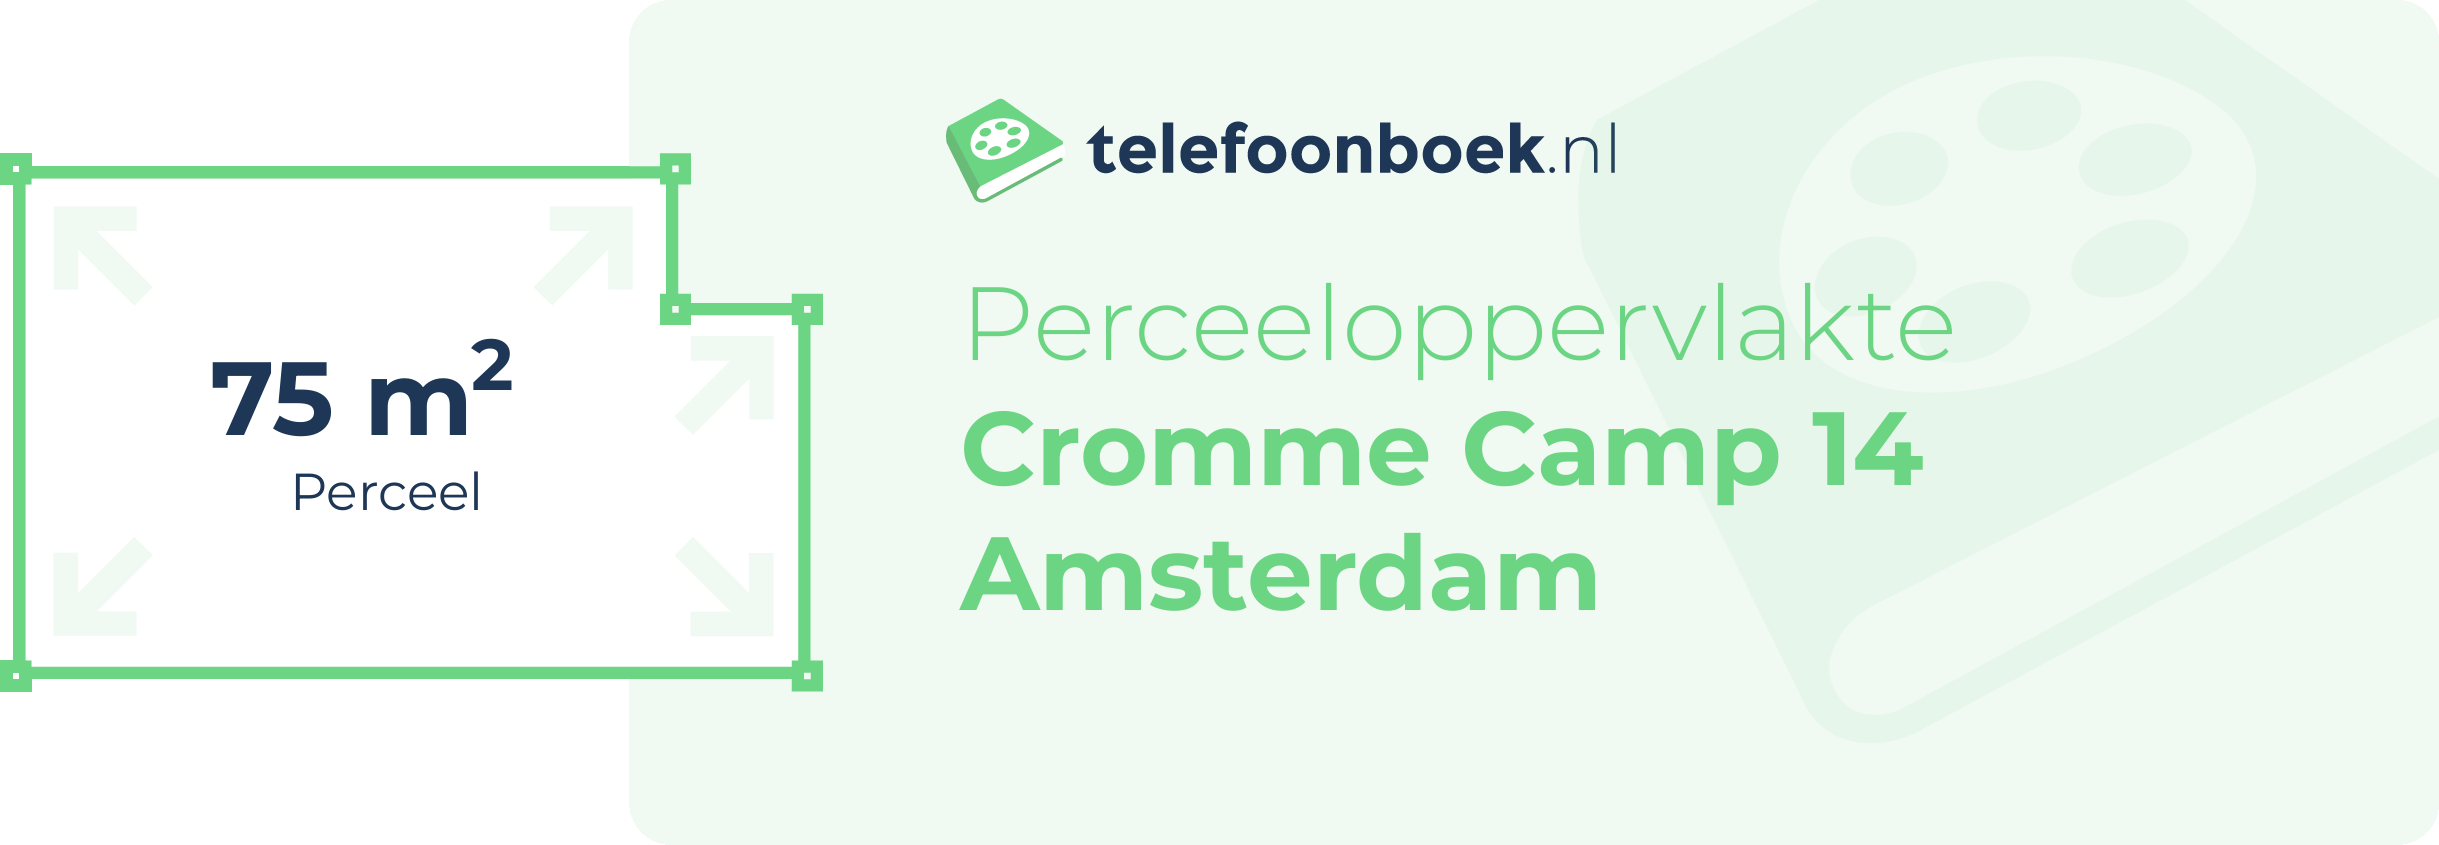 Perceeloppervlakte Cromme Camp 14 Amsterdam